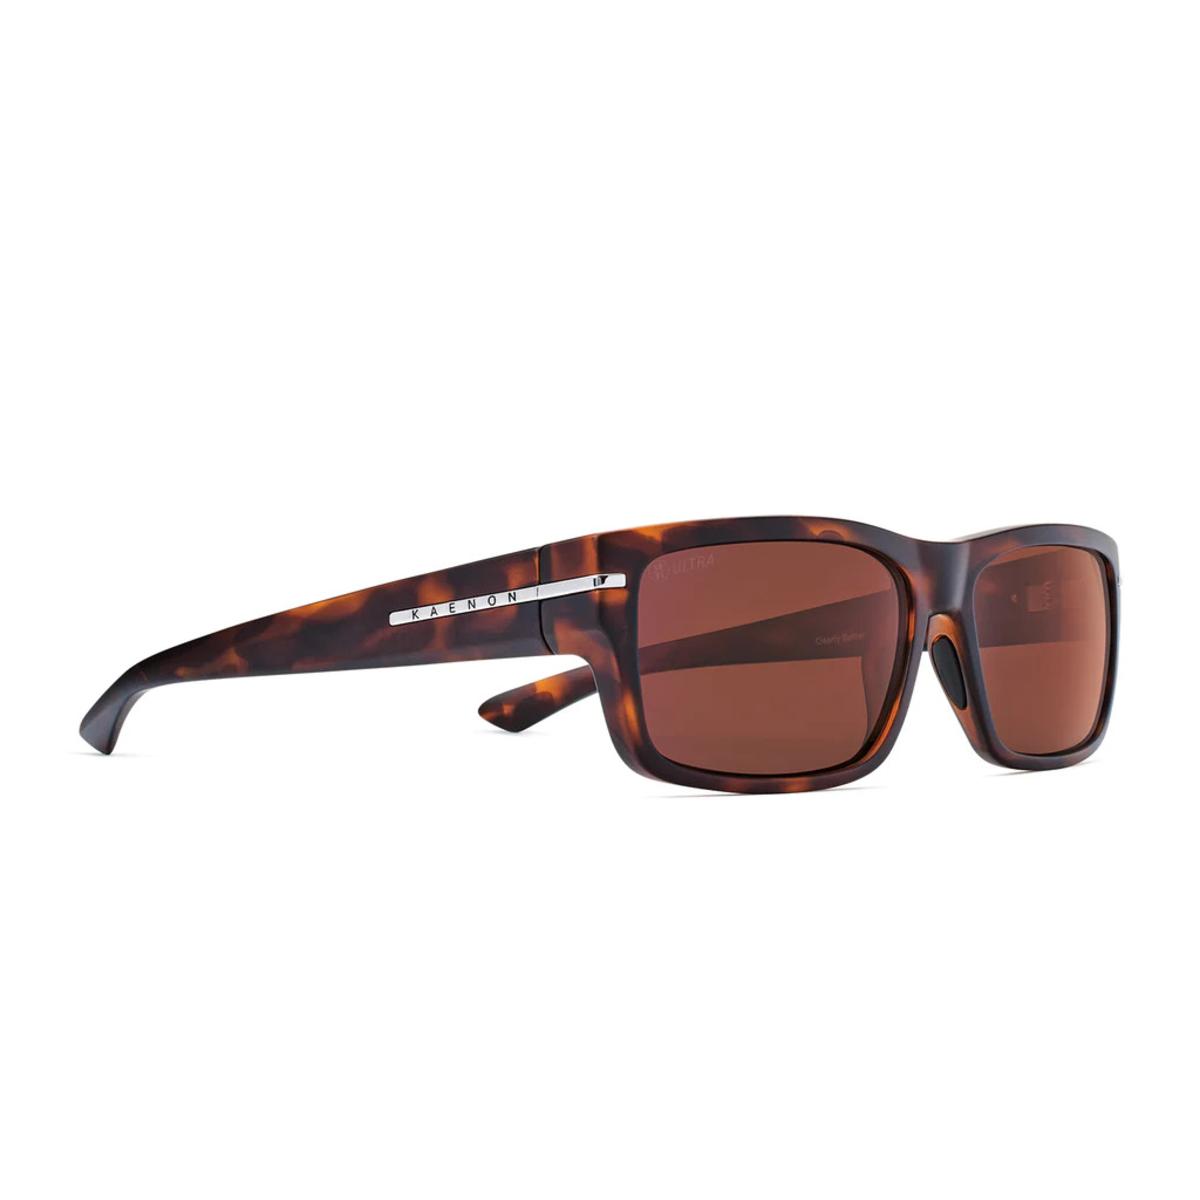 Kaenon Silverado Polarized Sunglasses